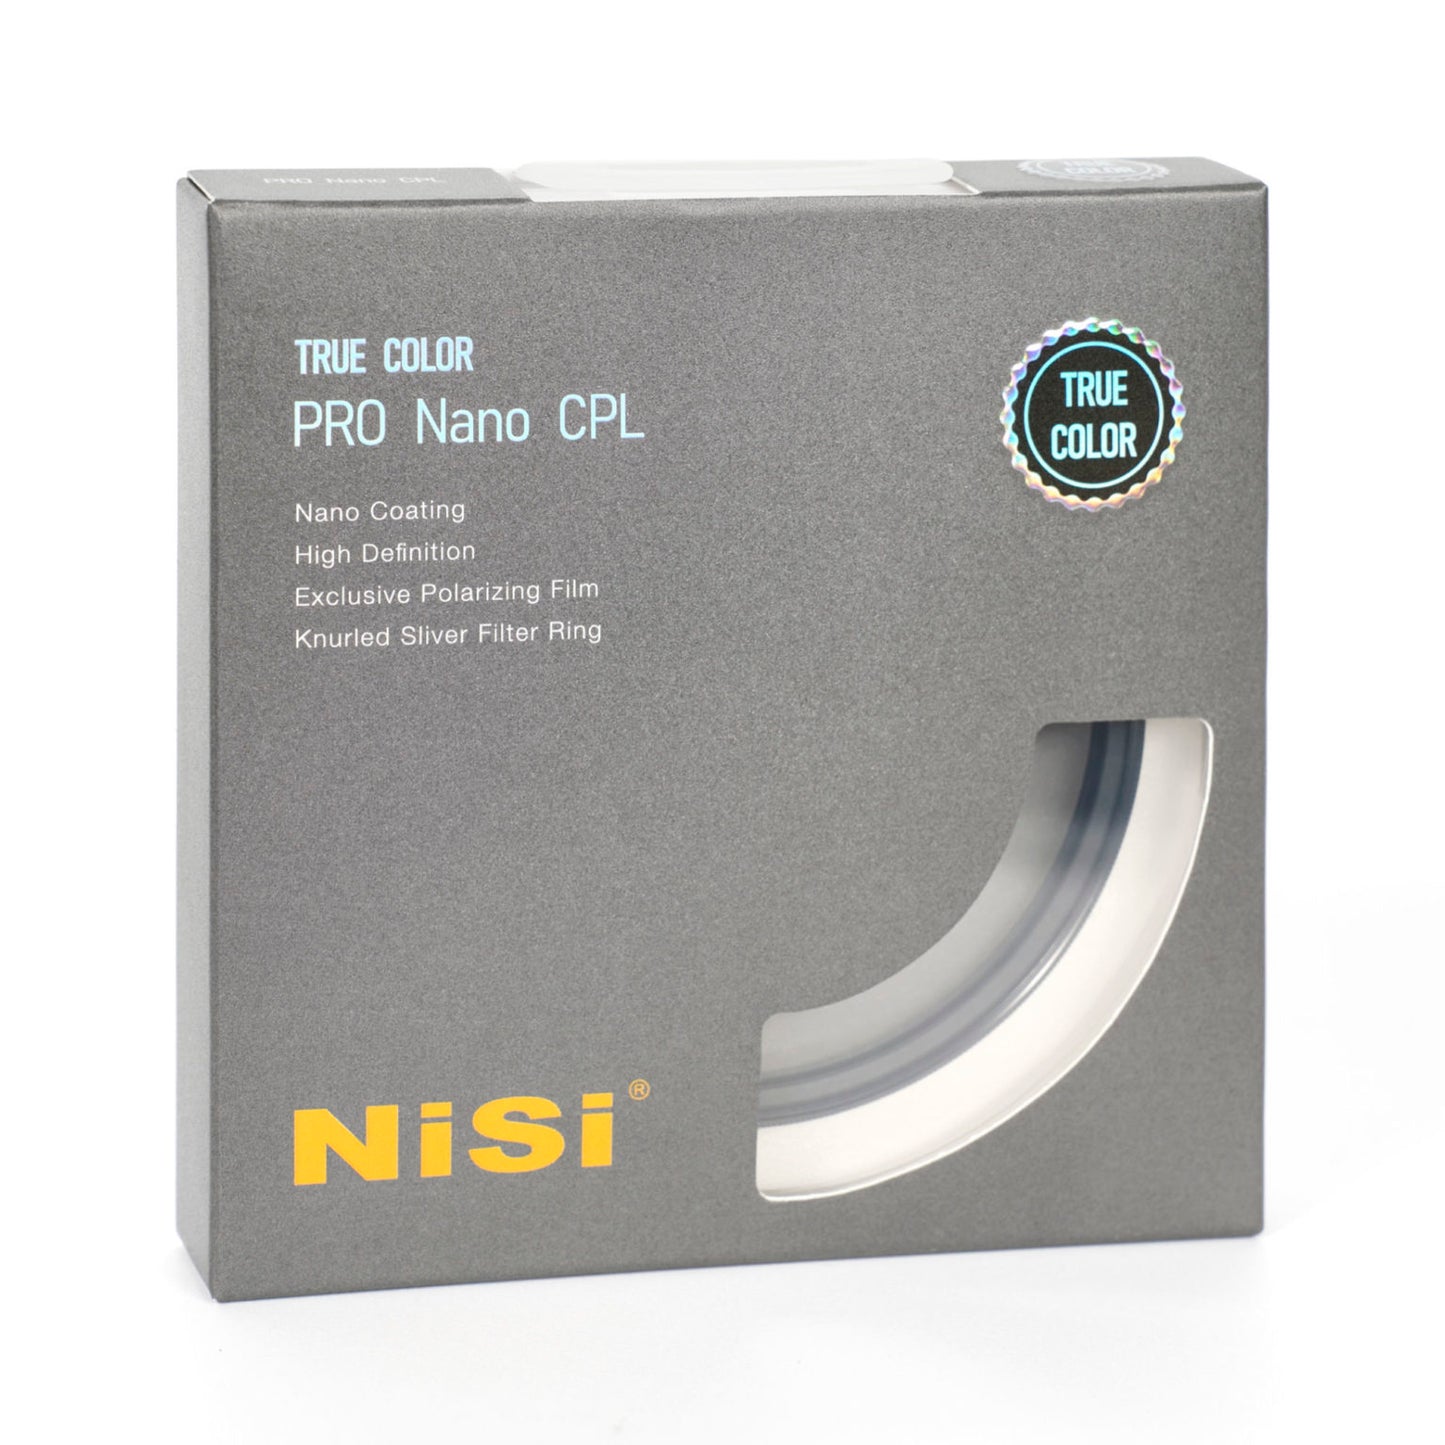 NiSi 40.5mm True Color Pro Nano CPL Circular Polarizing Filter